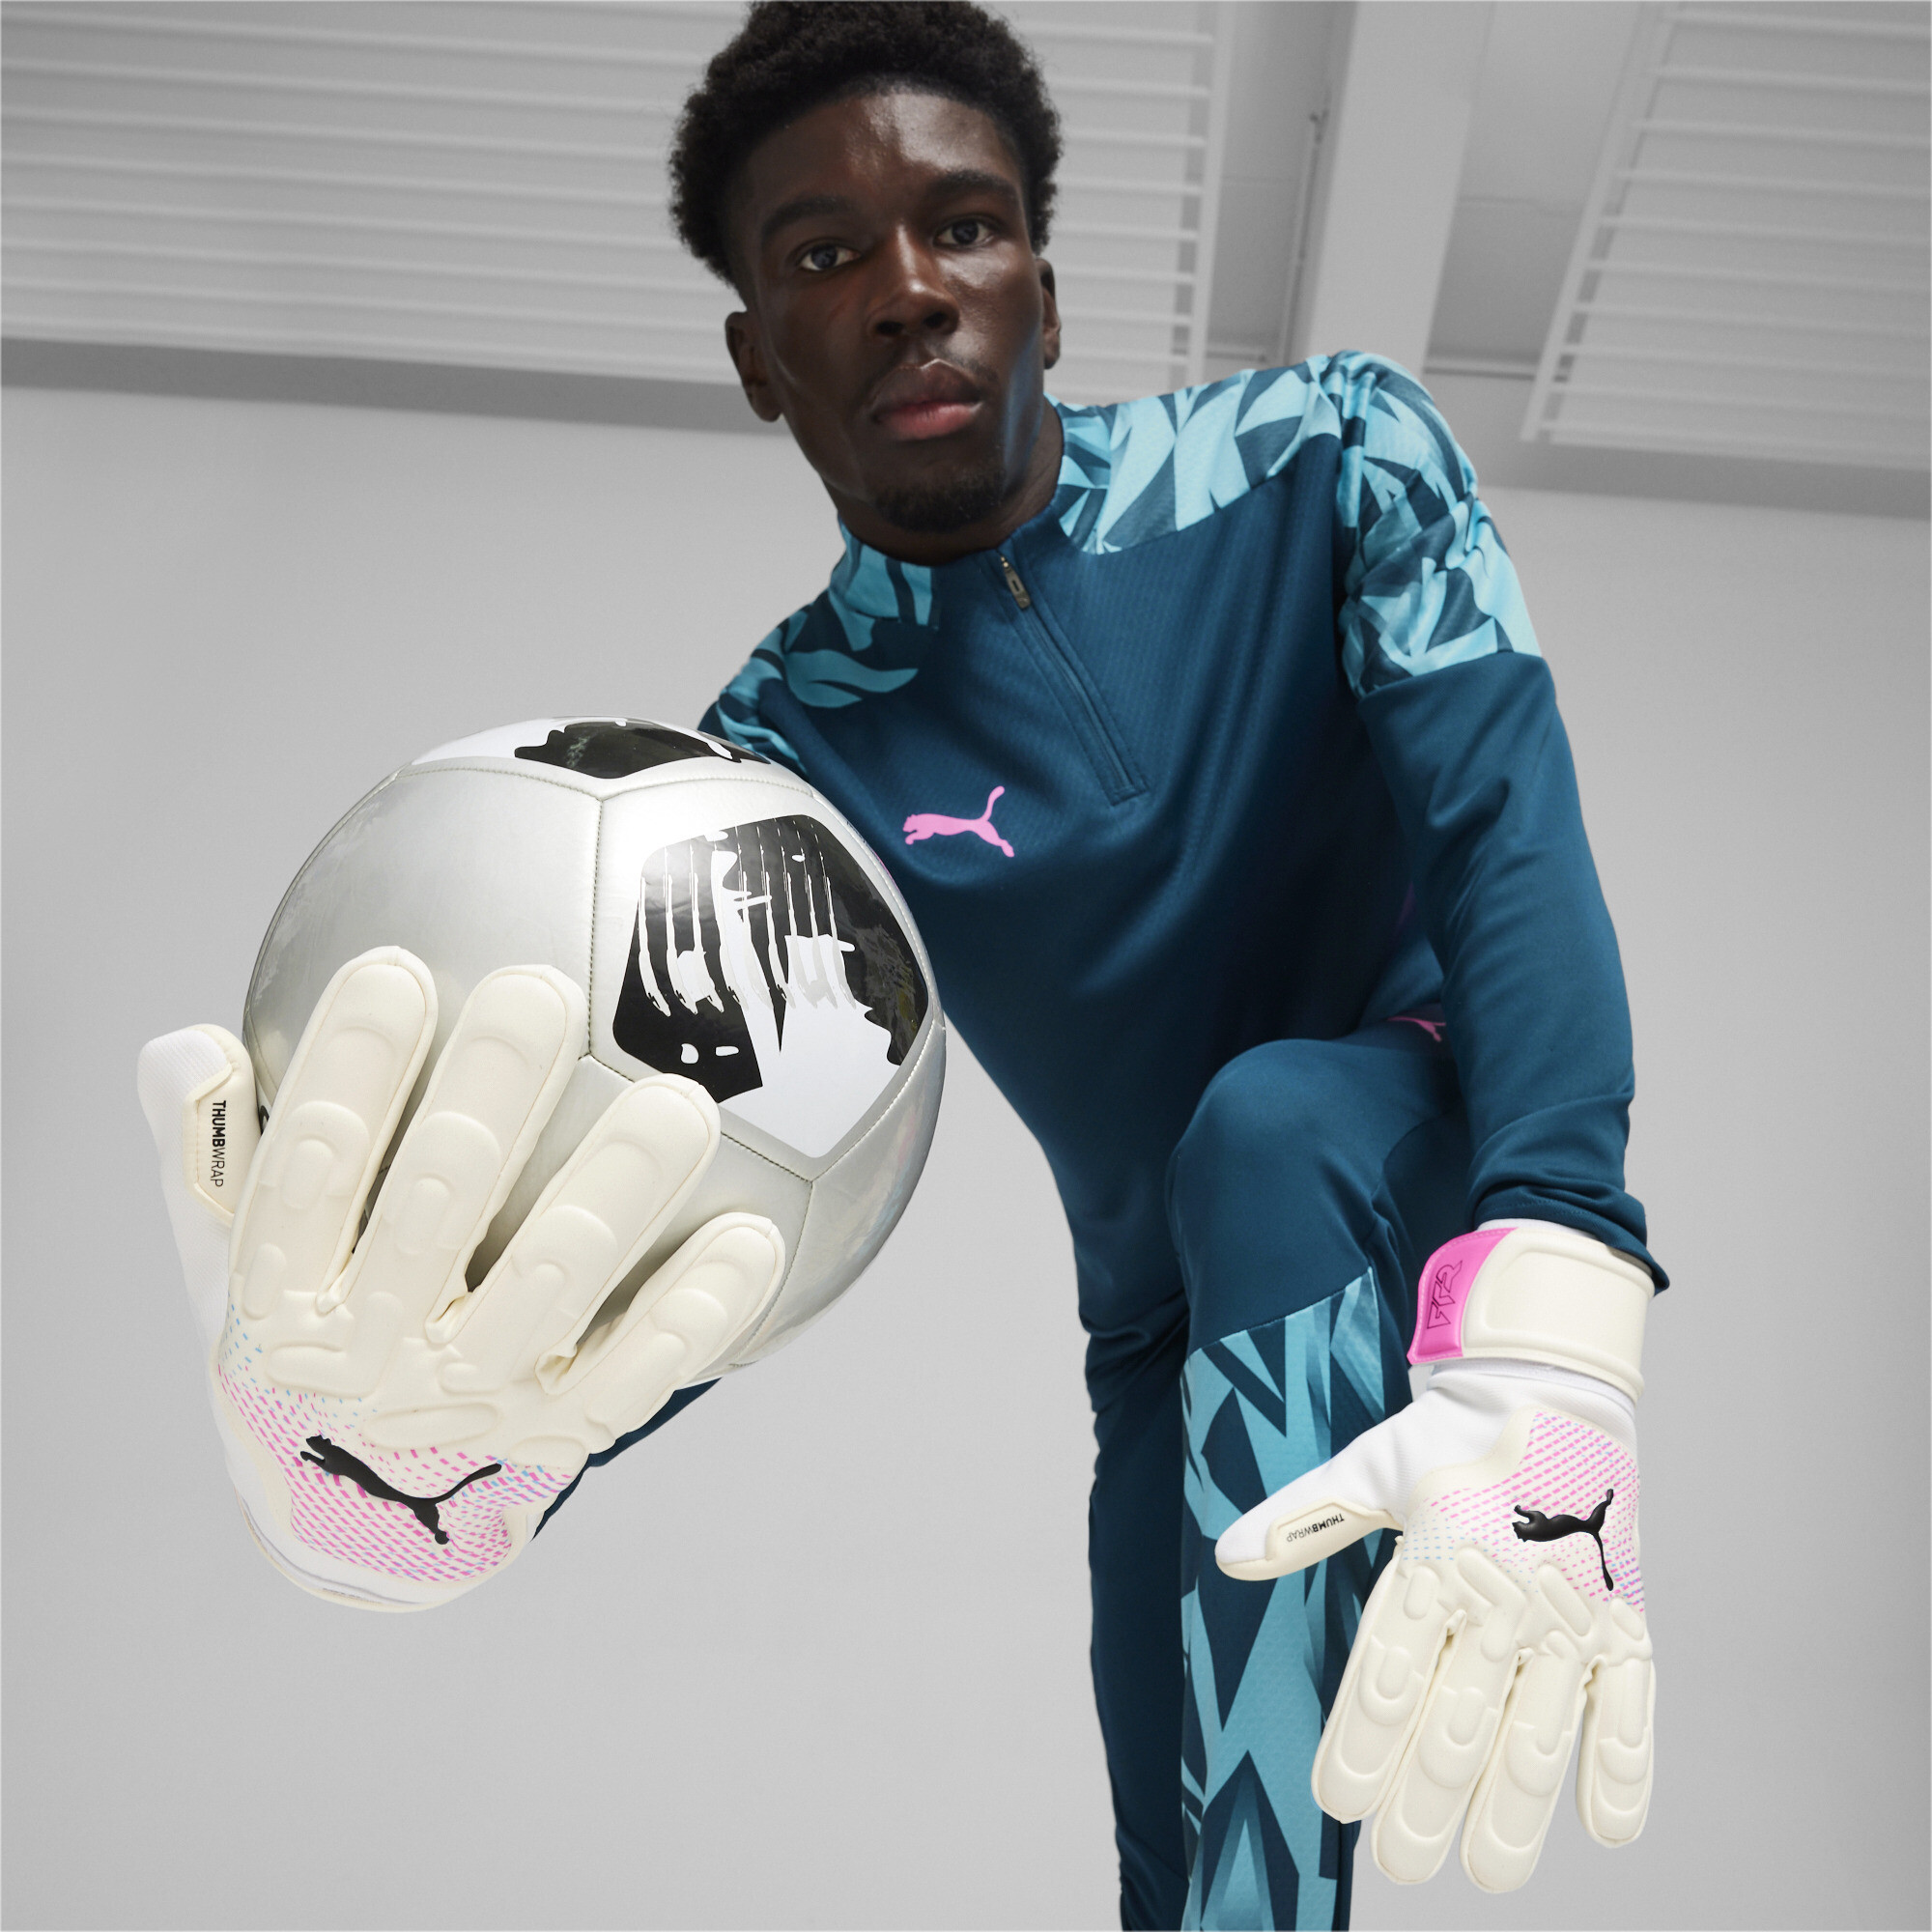 Puma FUTURE Match Goalkeeper Gloves, White, Size 8, Accessories